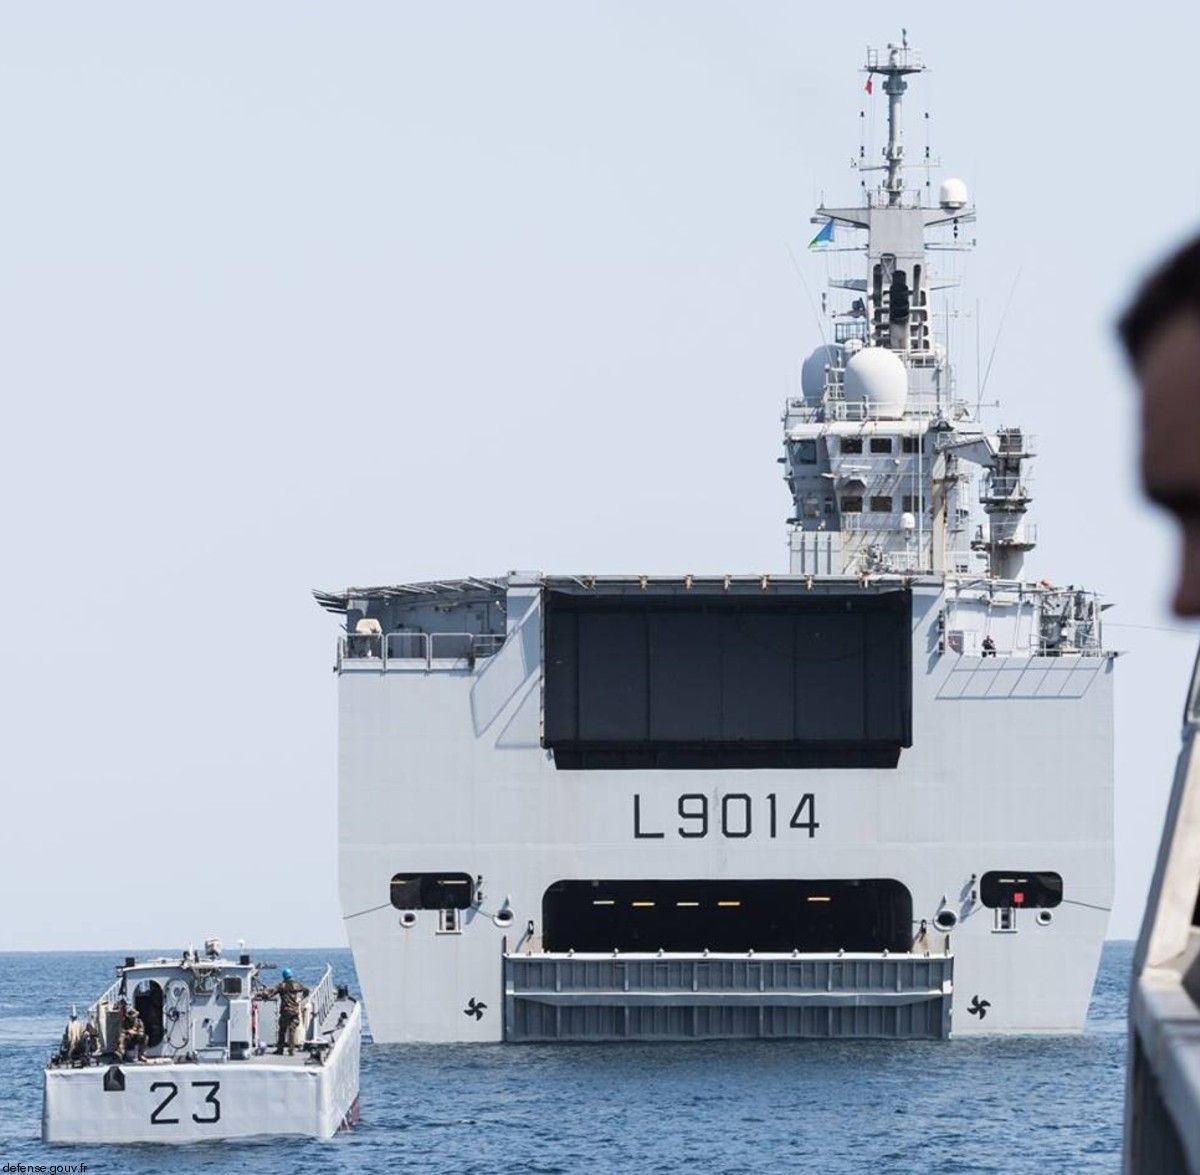 l-9014 fs tonnere mistral class amphibious assault command ship bpc french navy marine nationale 49